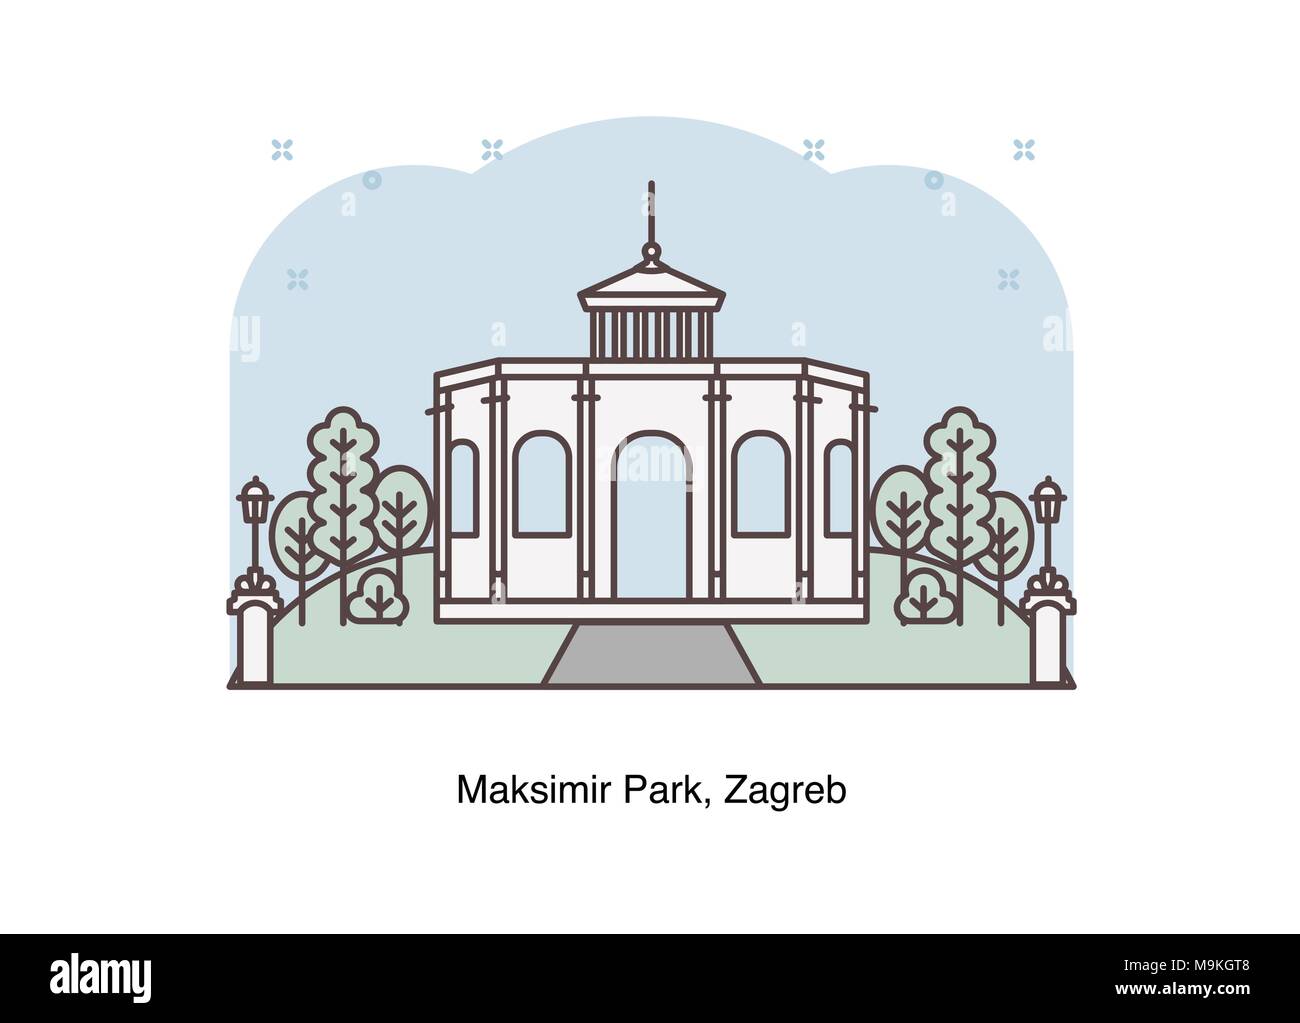 Vector line illustration of Maksimir Park, Zagreb, Croatia. Stock Vector